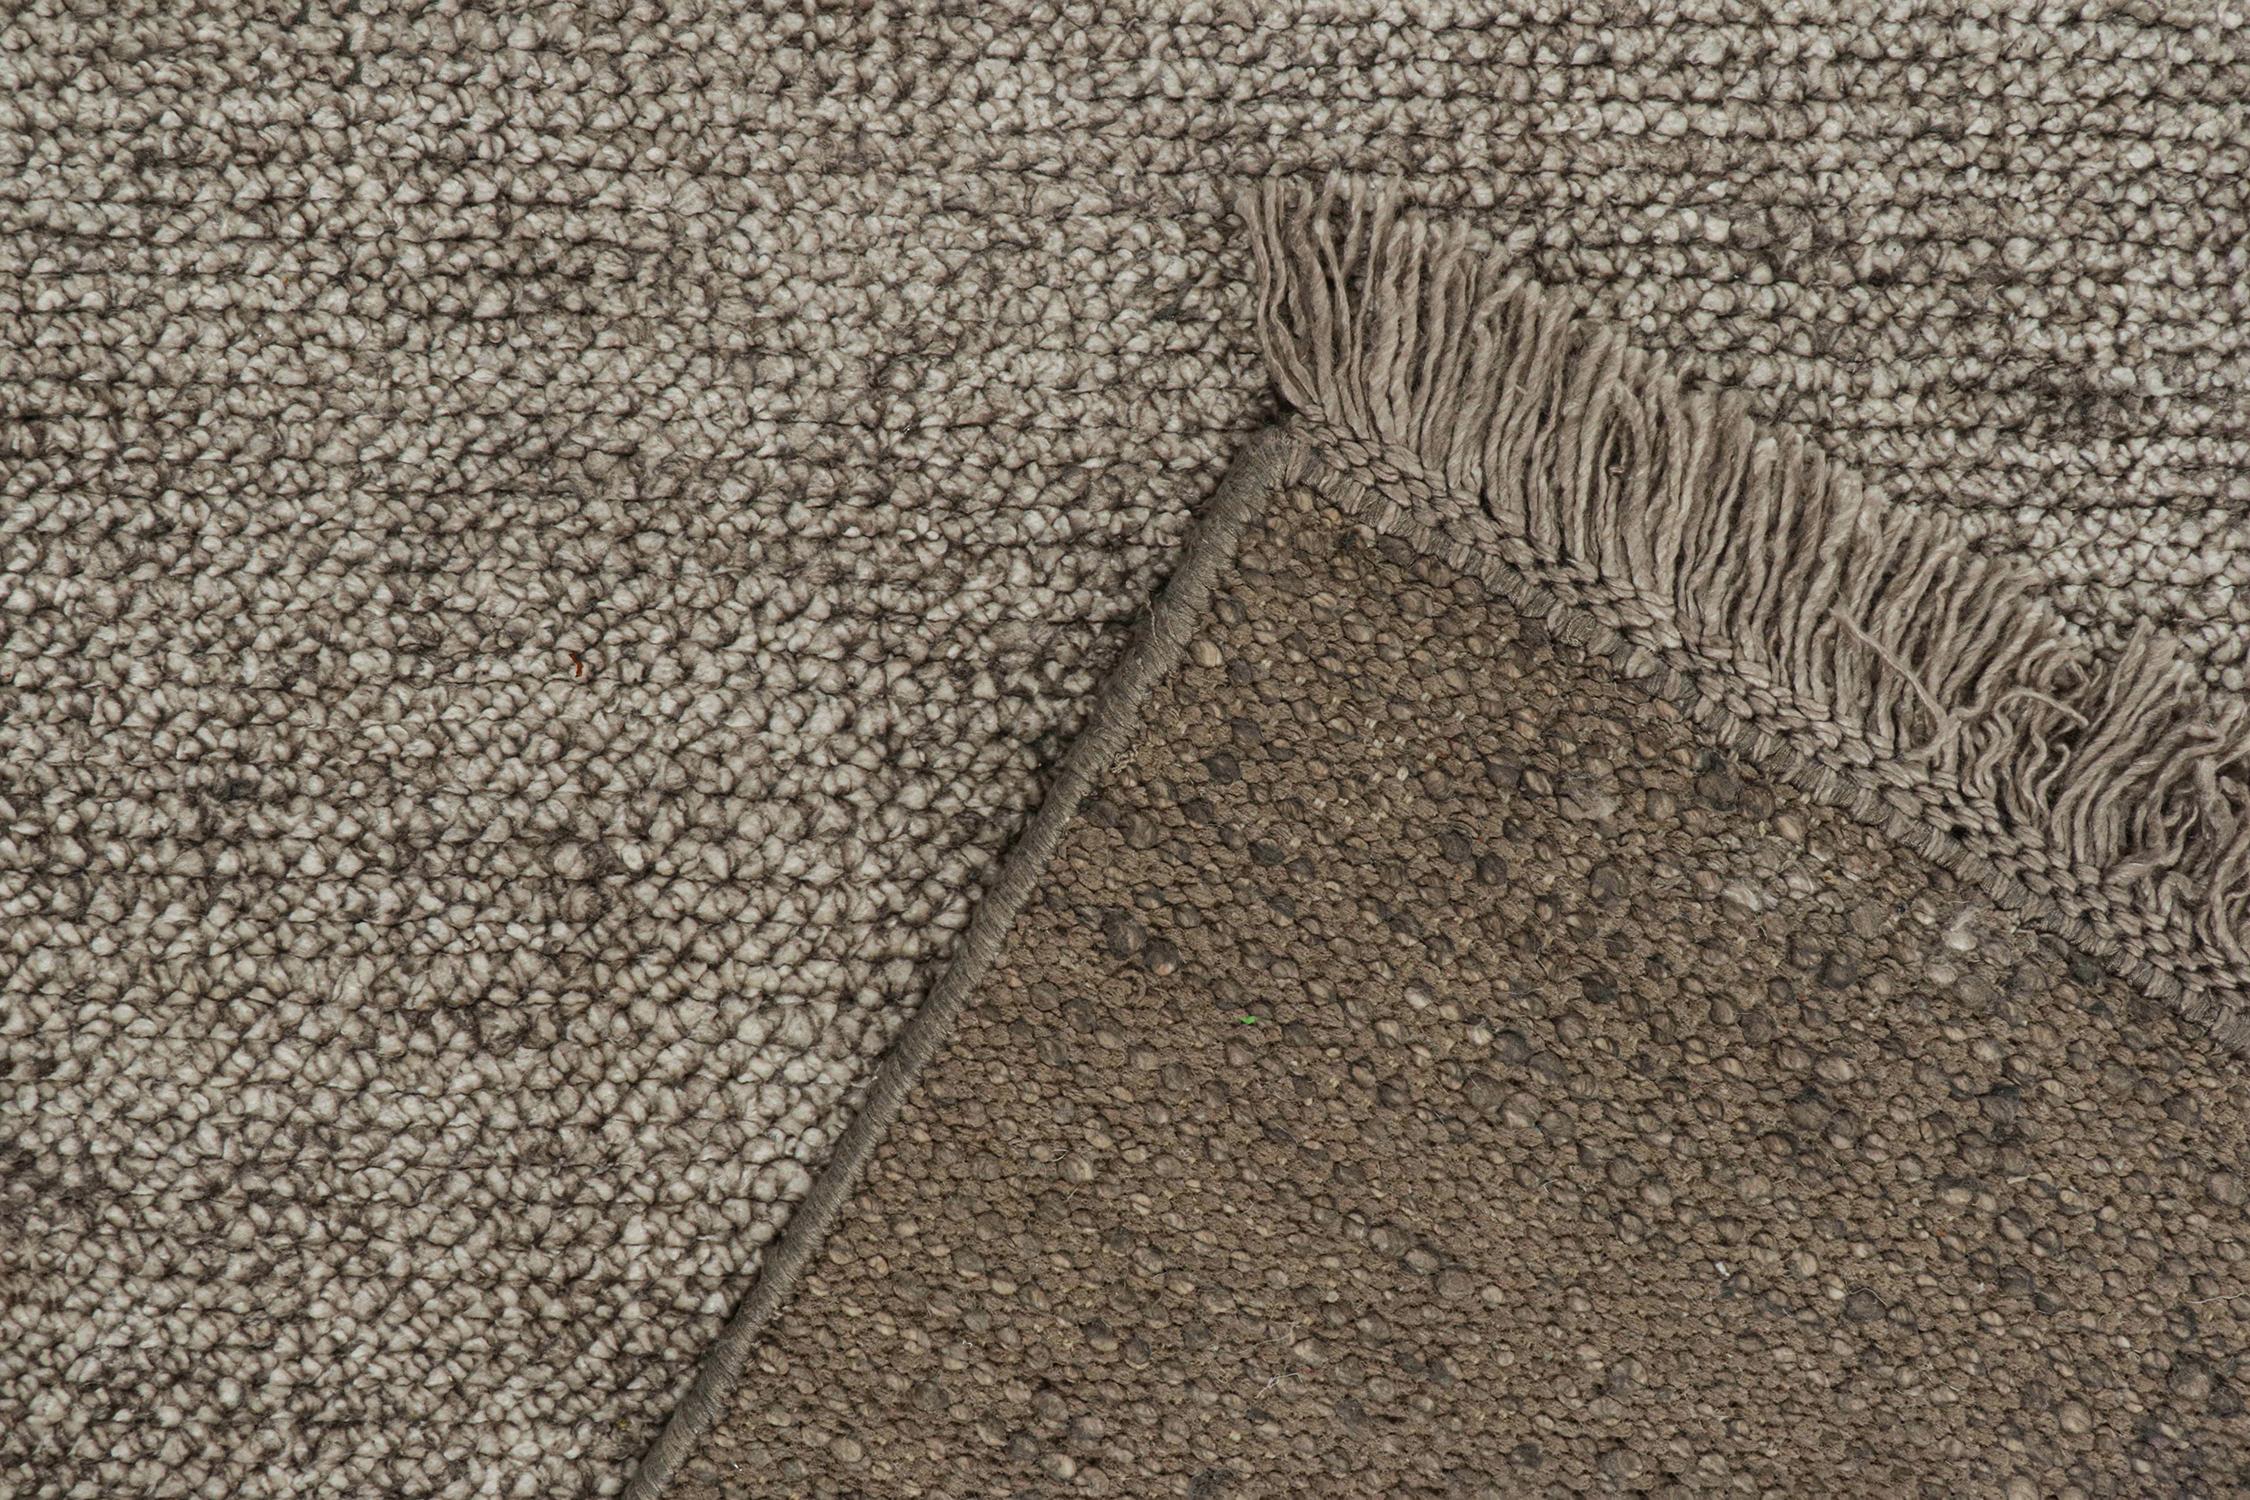 Silk Rug & Kilim’s Modern rug in Solid Silver-Gray Tone-on-Tone Striae For Sale